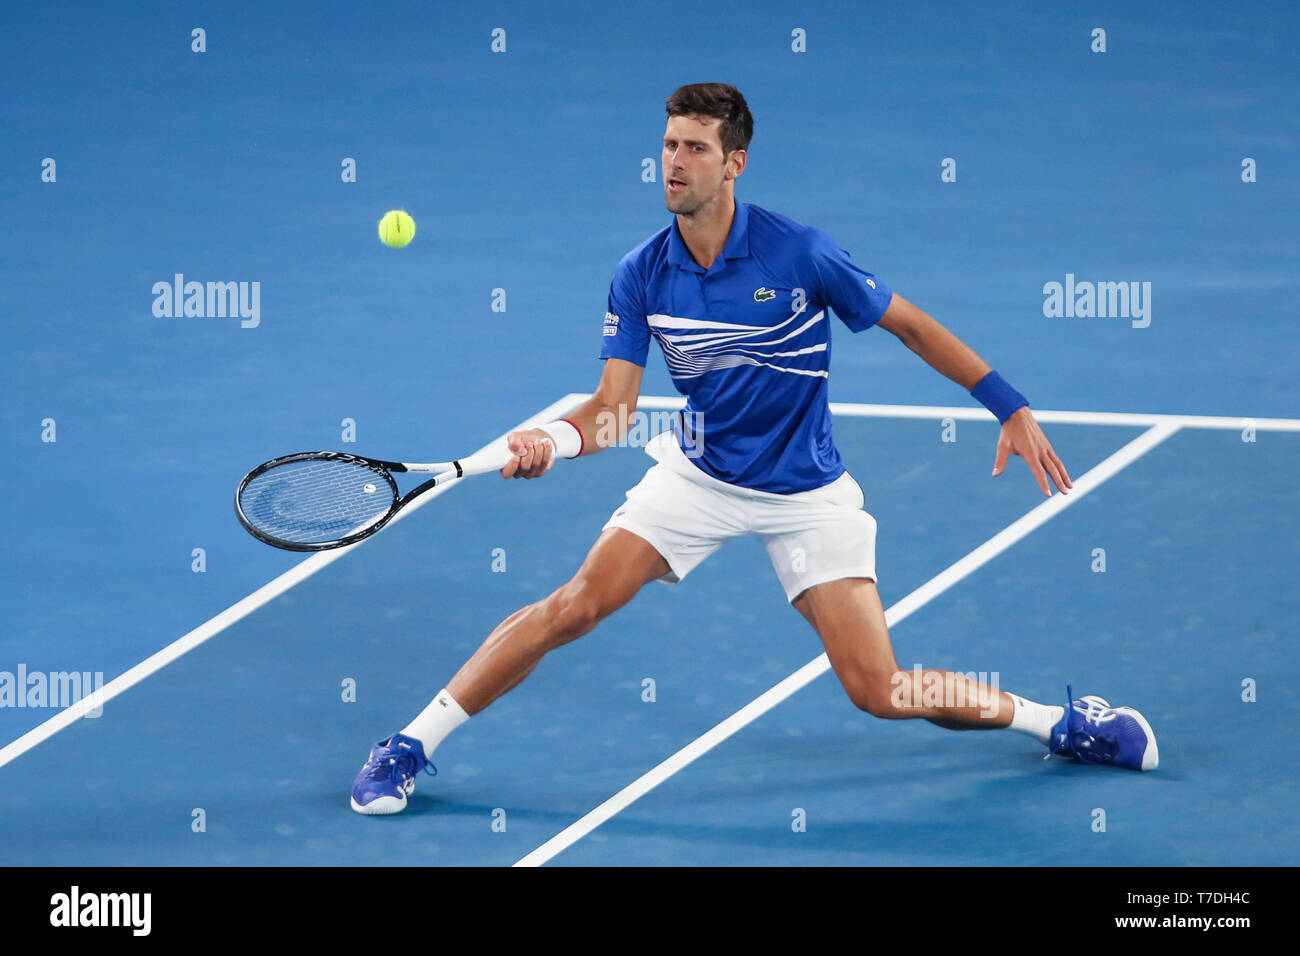 Djokovic australian open 2019 hi-res stock photography and images - Alamy